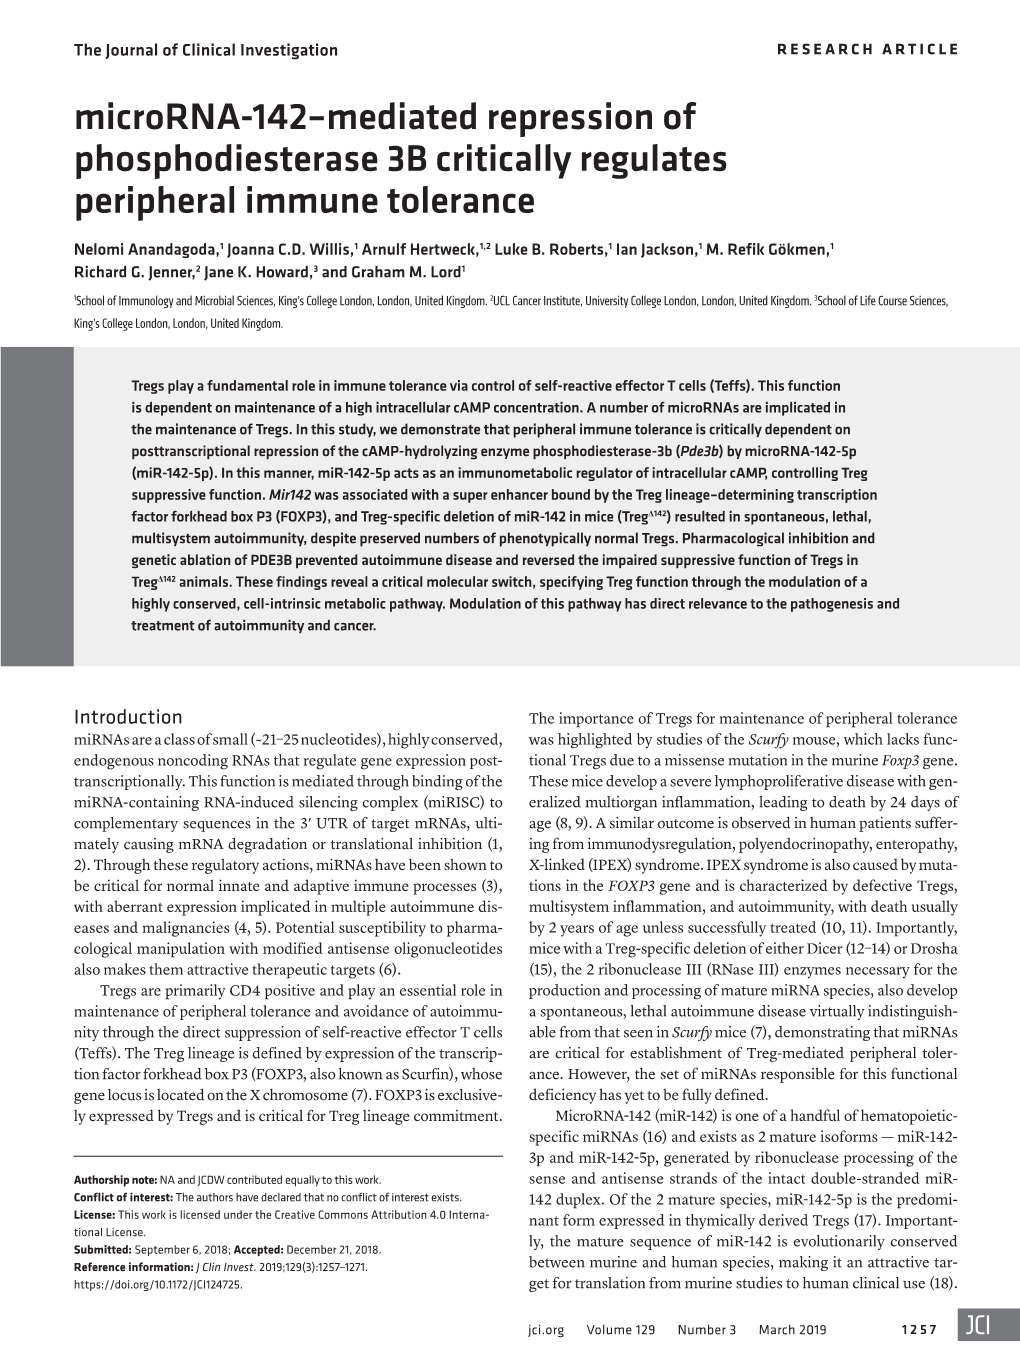 Microrna-142–Mediated Repression of Phosphodiesterase 3B Critically Regulates Peripheral Immune Tolerance